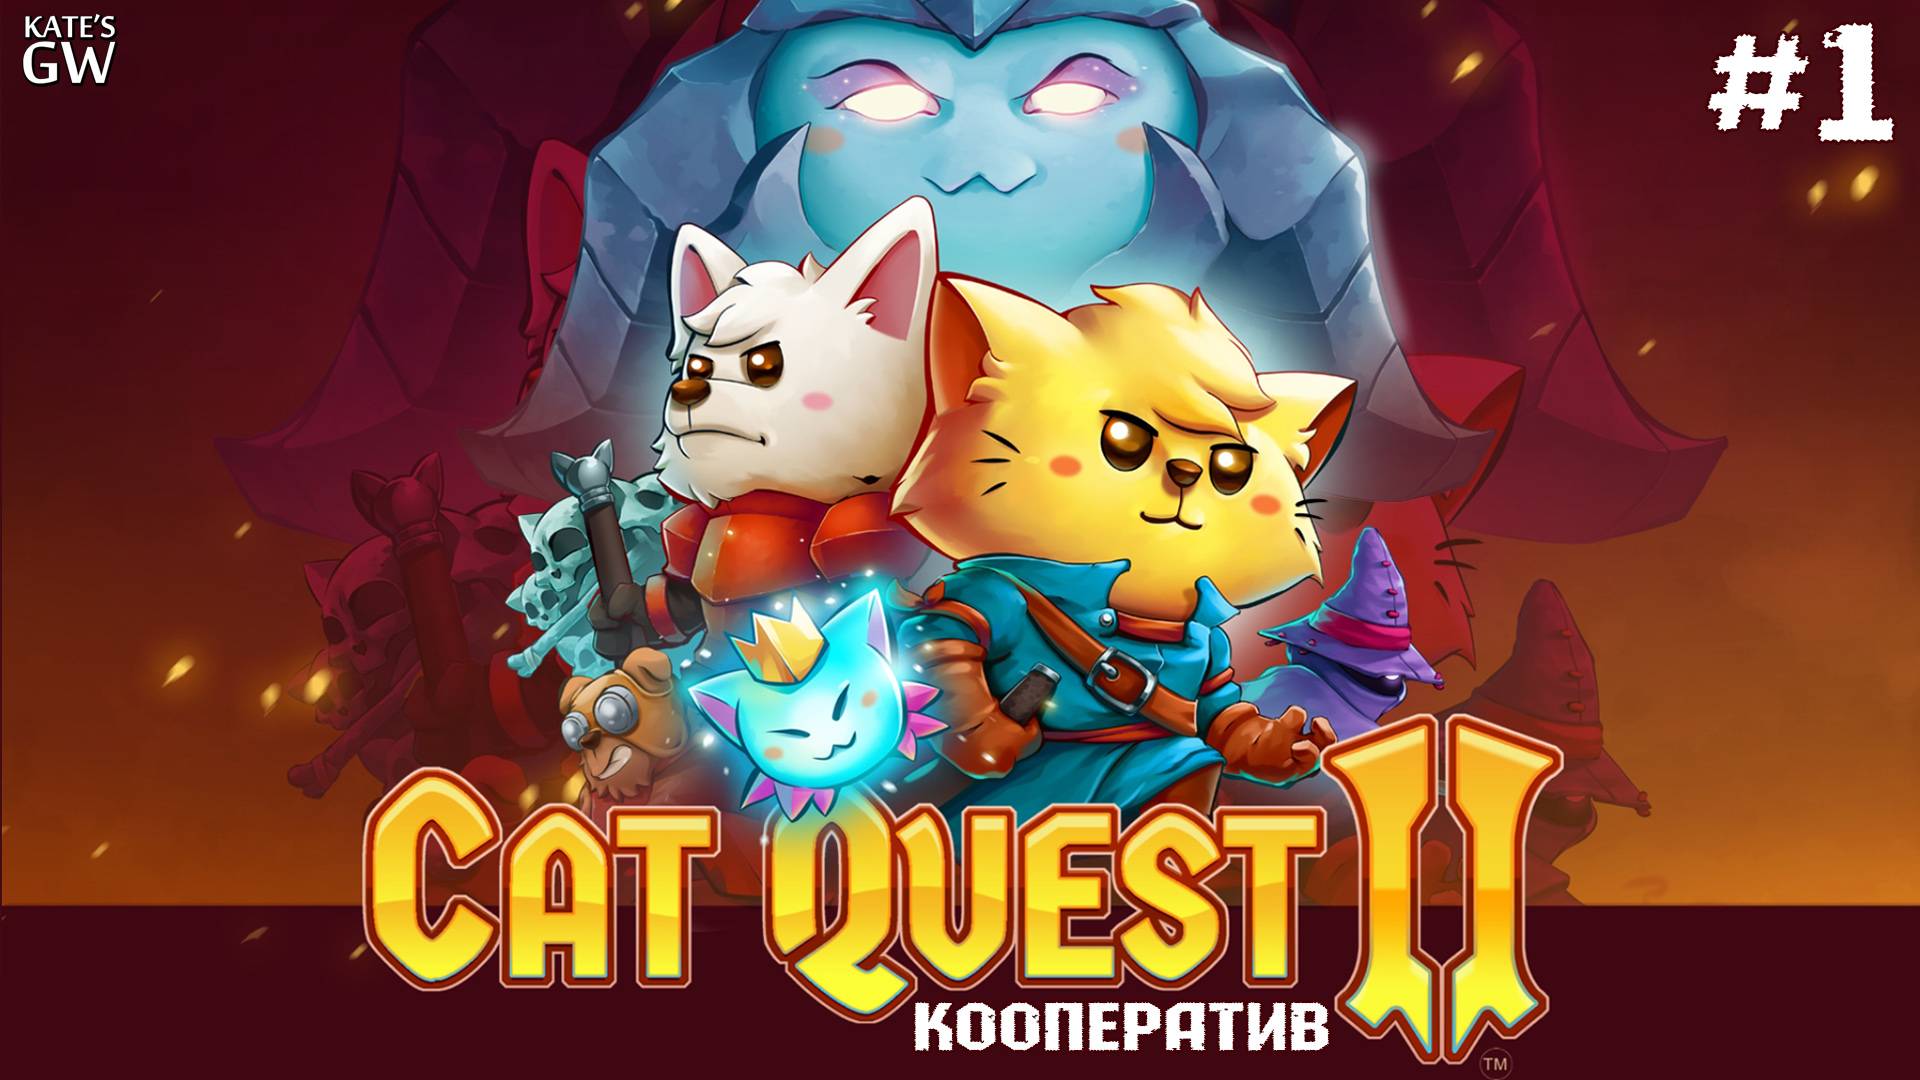 Cat Quest II - КООПЕРАТИВ. ЗАХОТЕЛОСЬ НЕКОЙ ДОЛИ МИМИШЕСТВА И ЮМОРА!